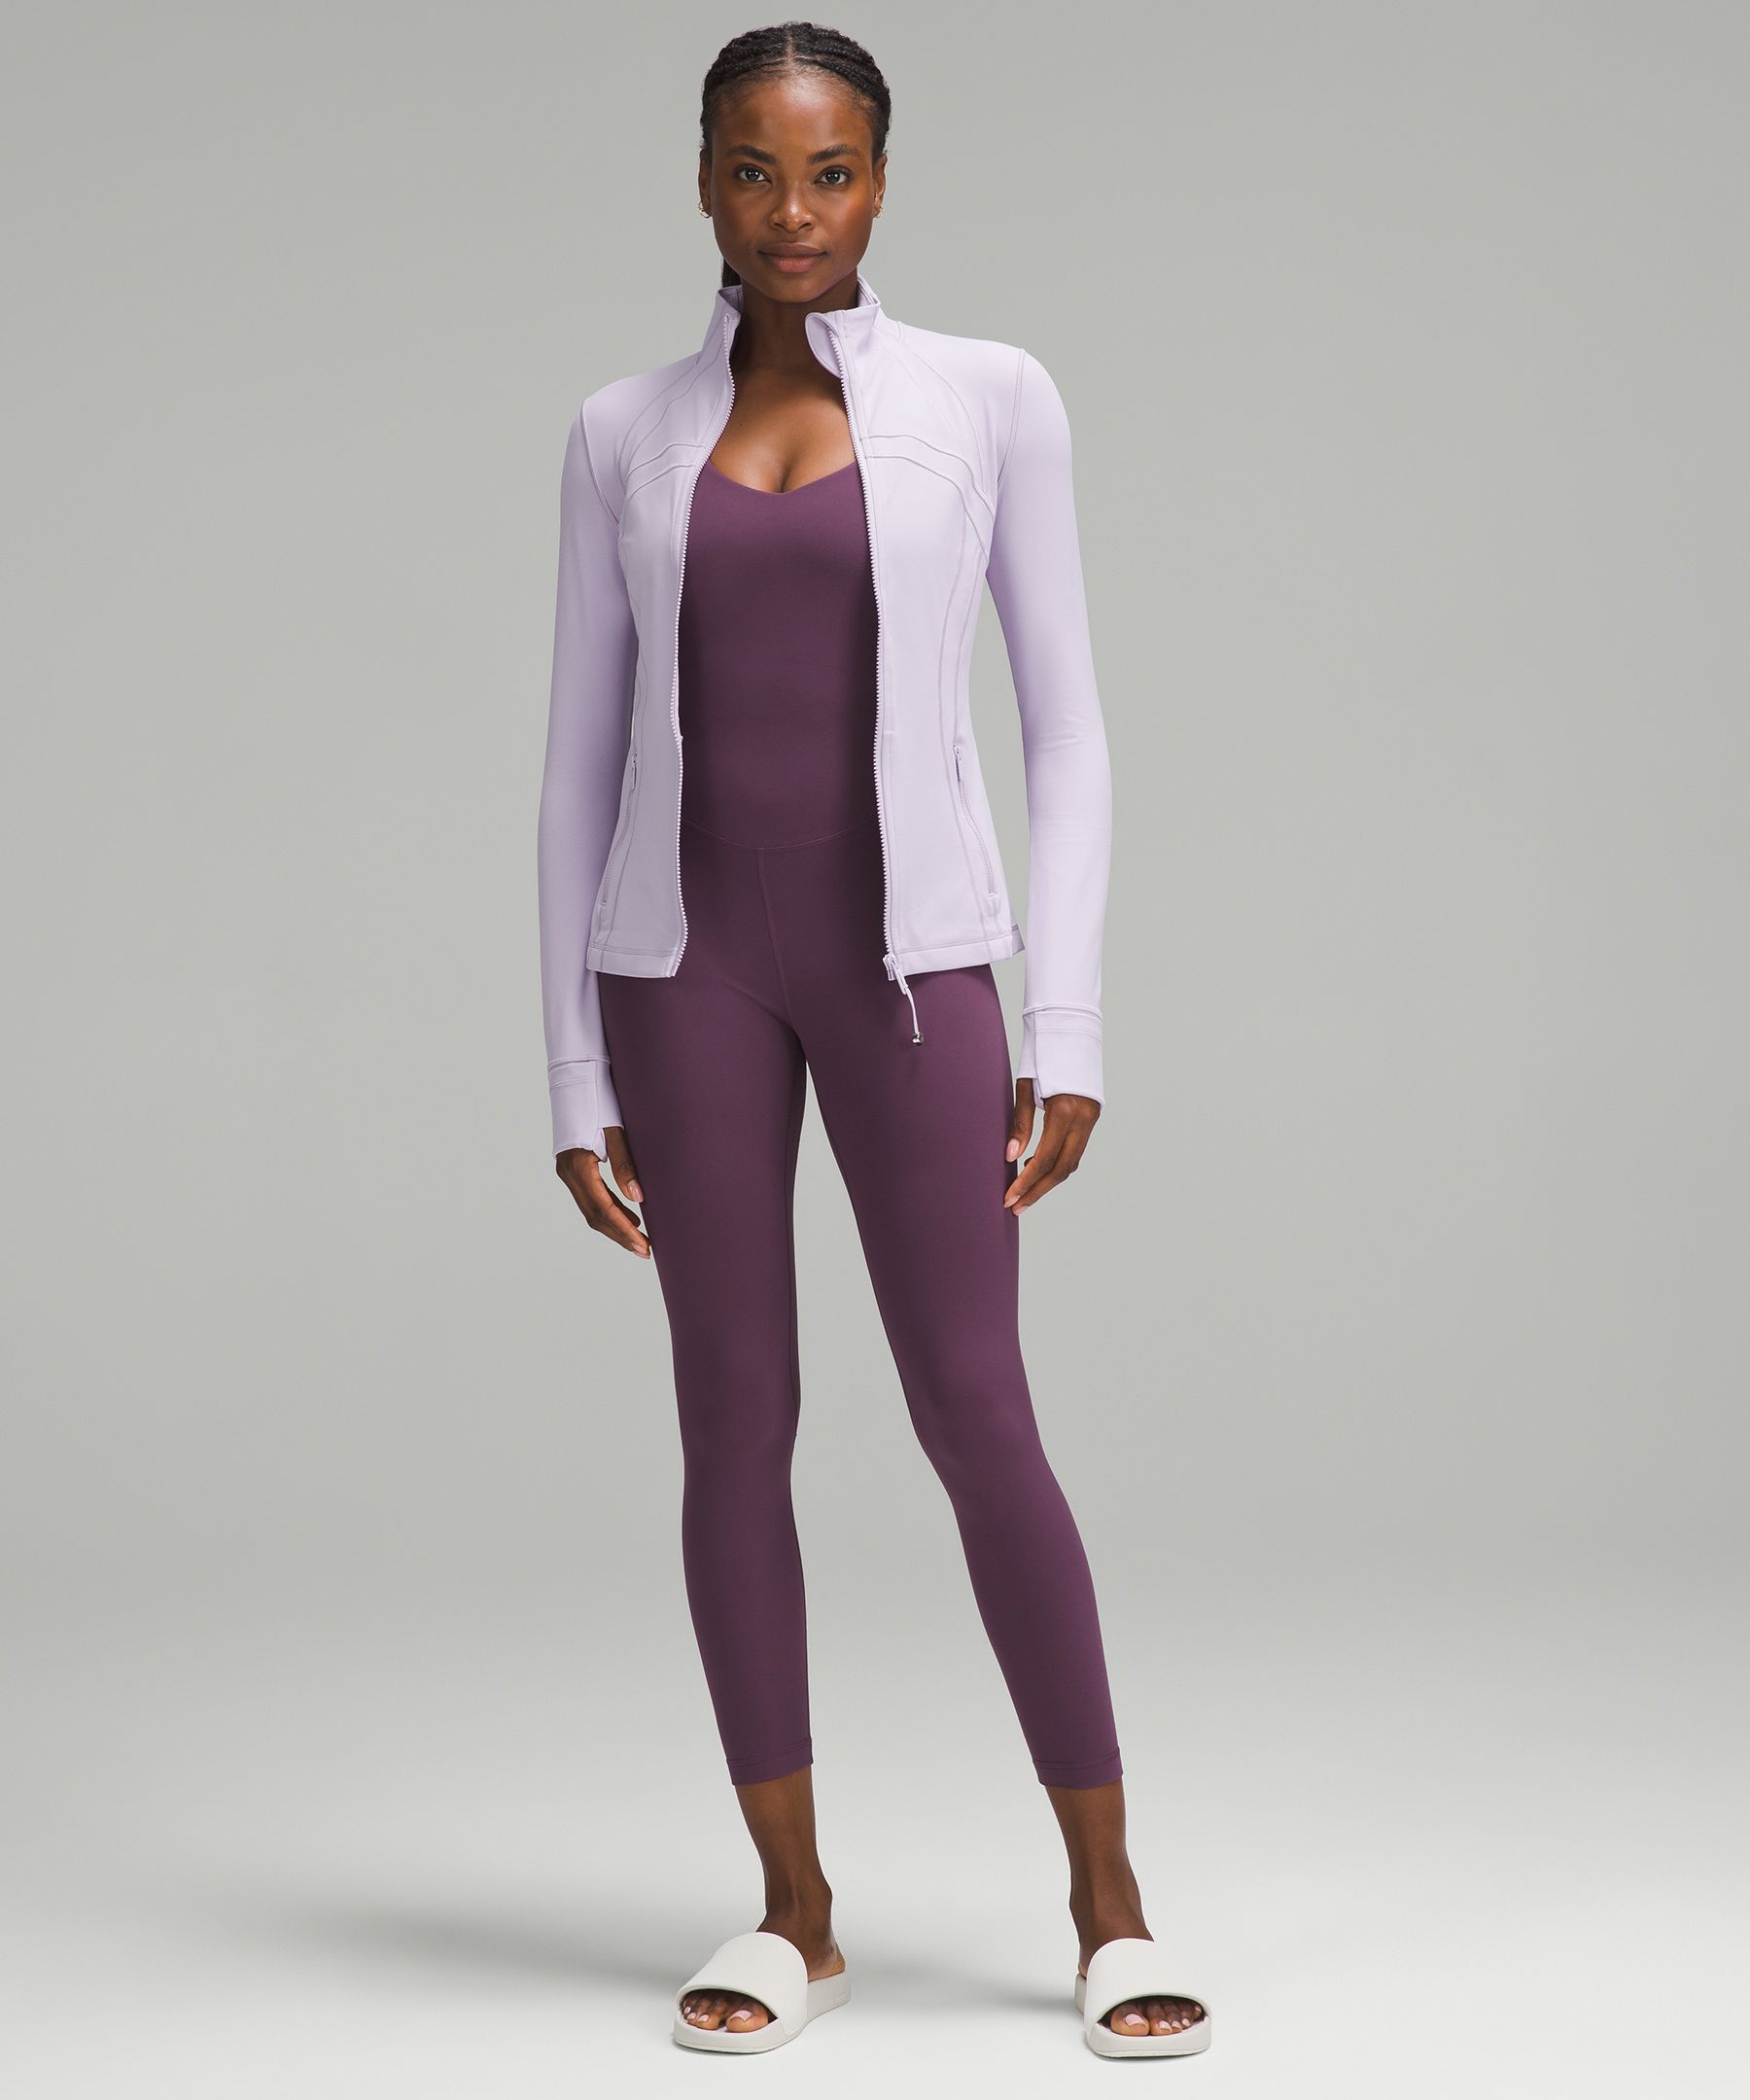 lululemon athletica, Jackets & Coats, Lululemon Define Jacket Luon Bbl  Zip Up Size 6 Faint Lavender